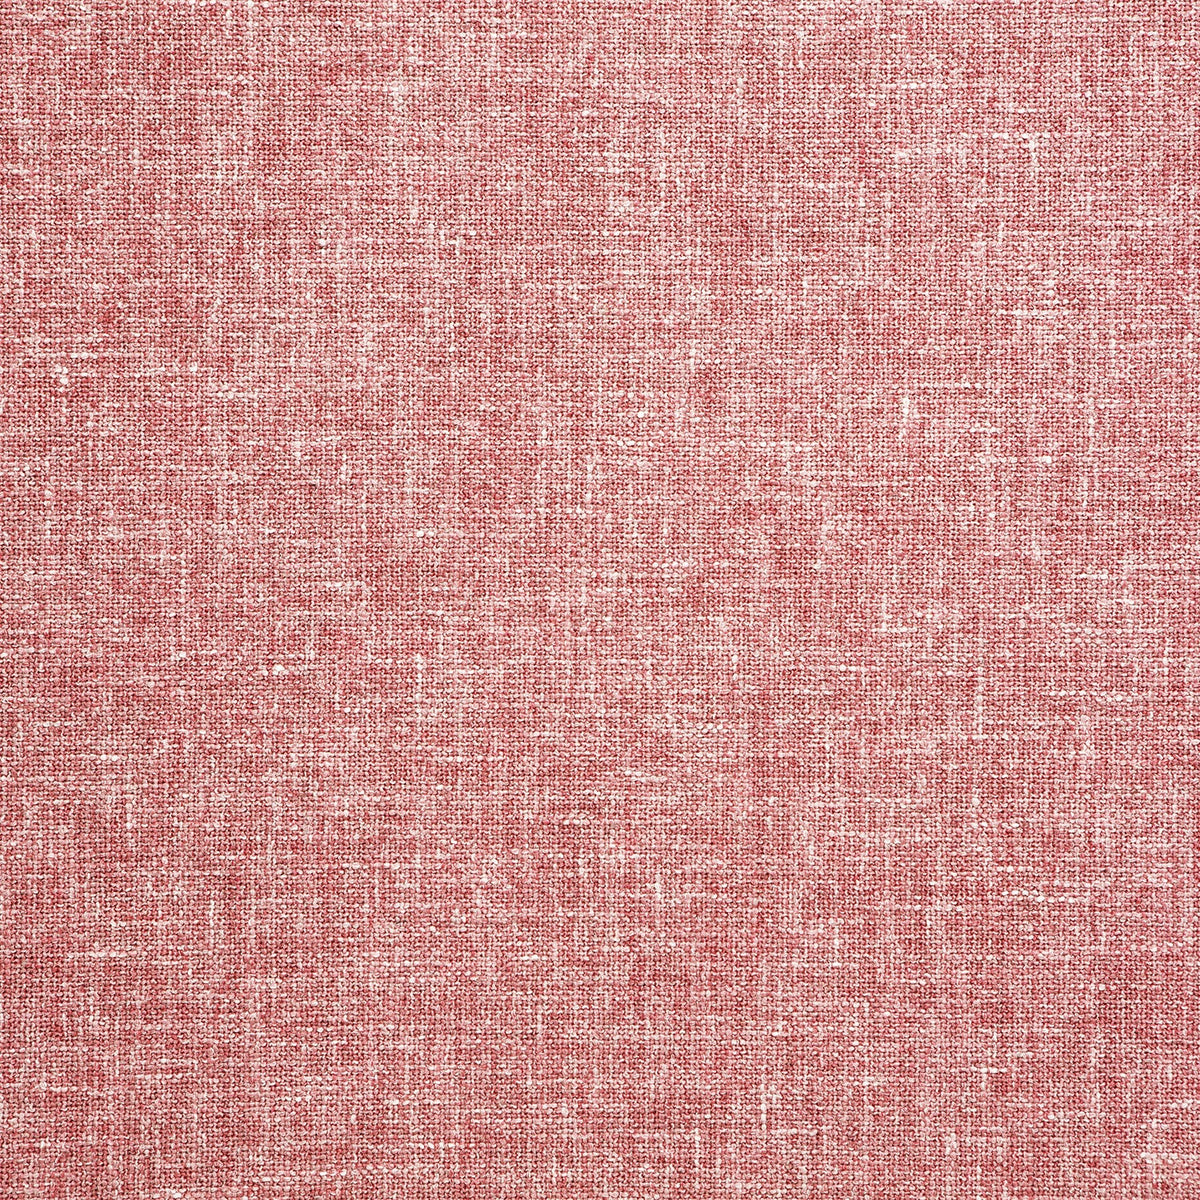 pink fabric texture seamless